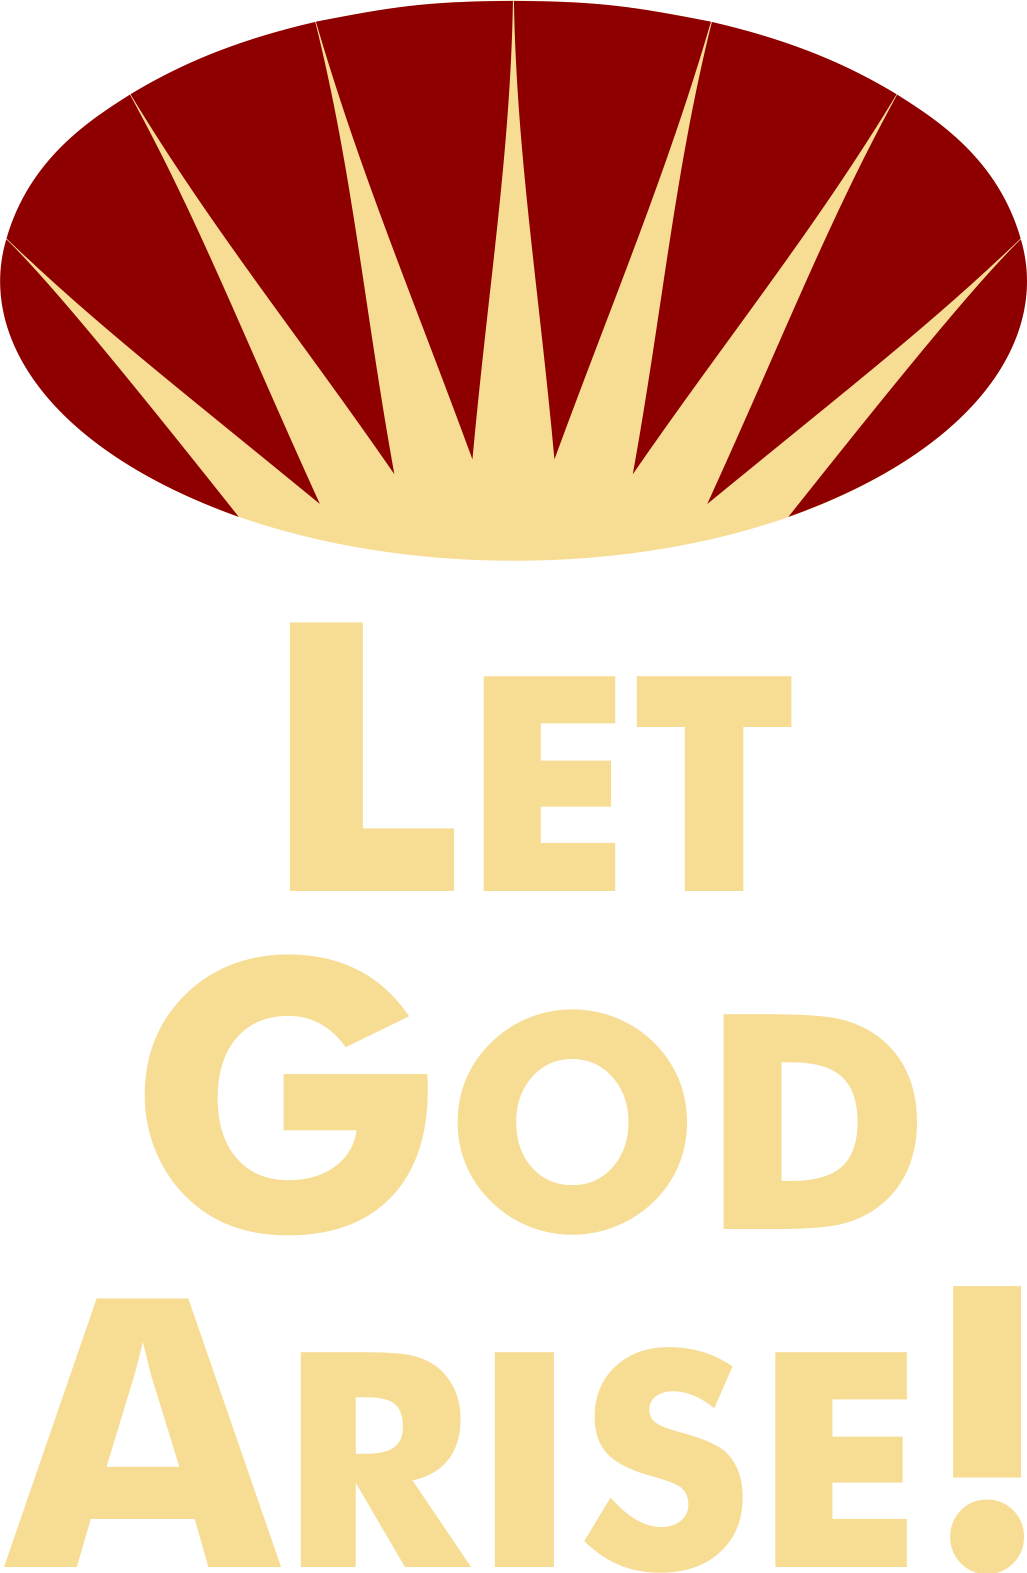 LGA logo red and gold